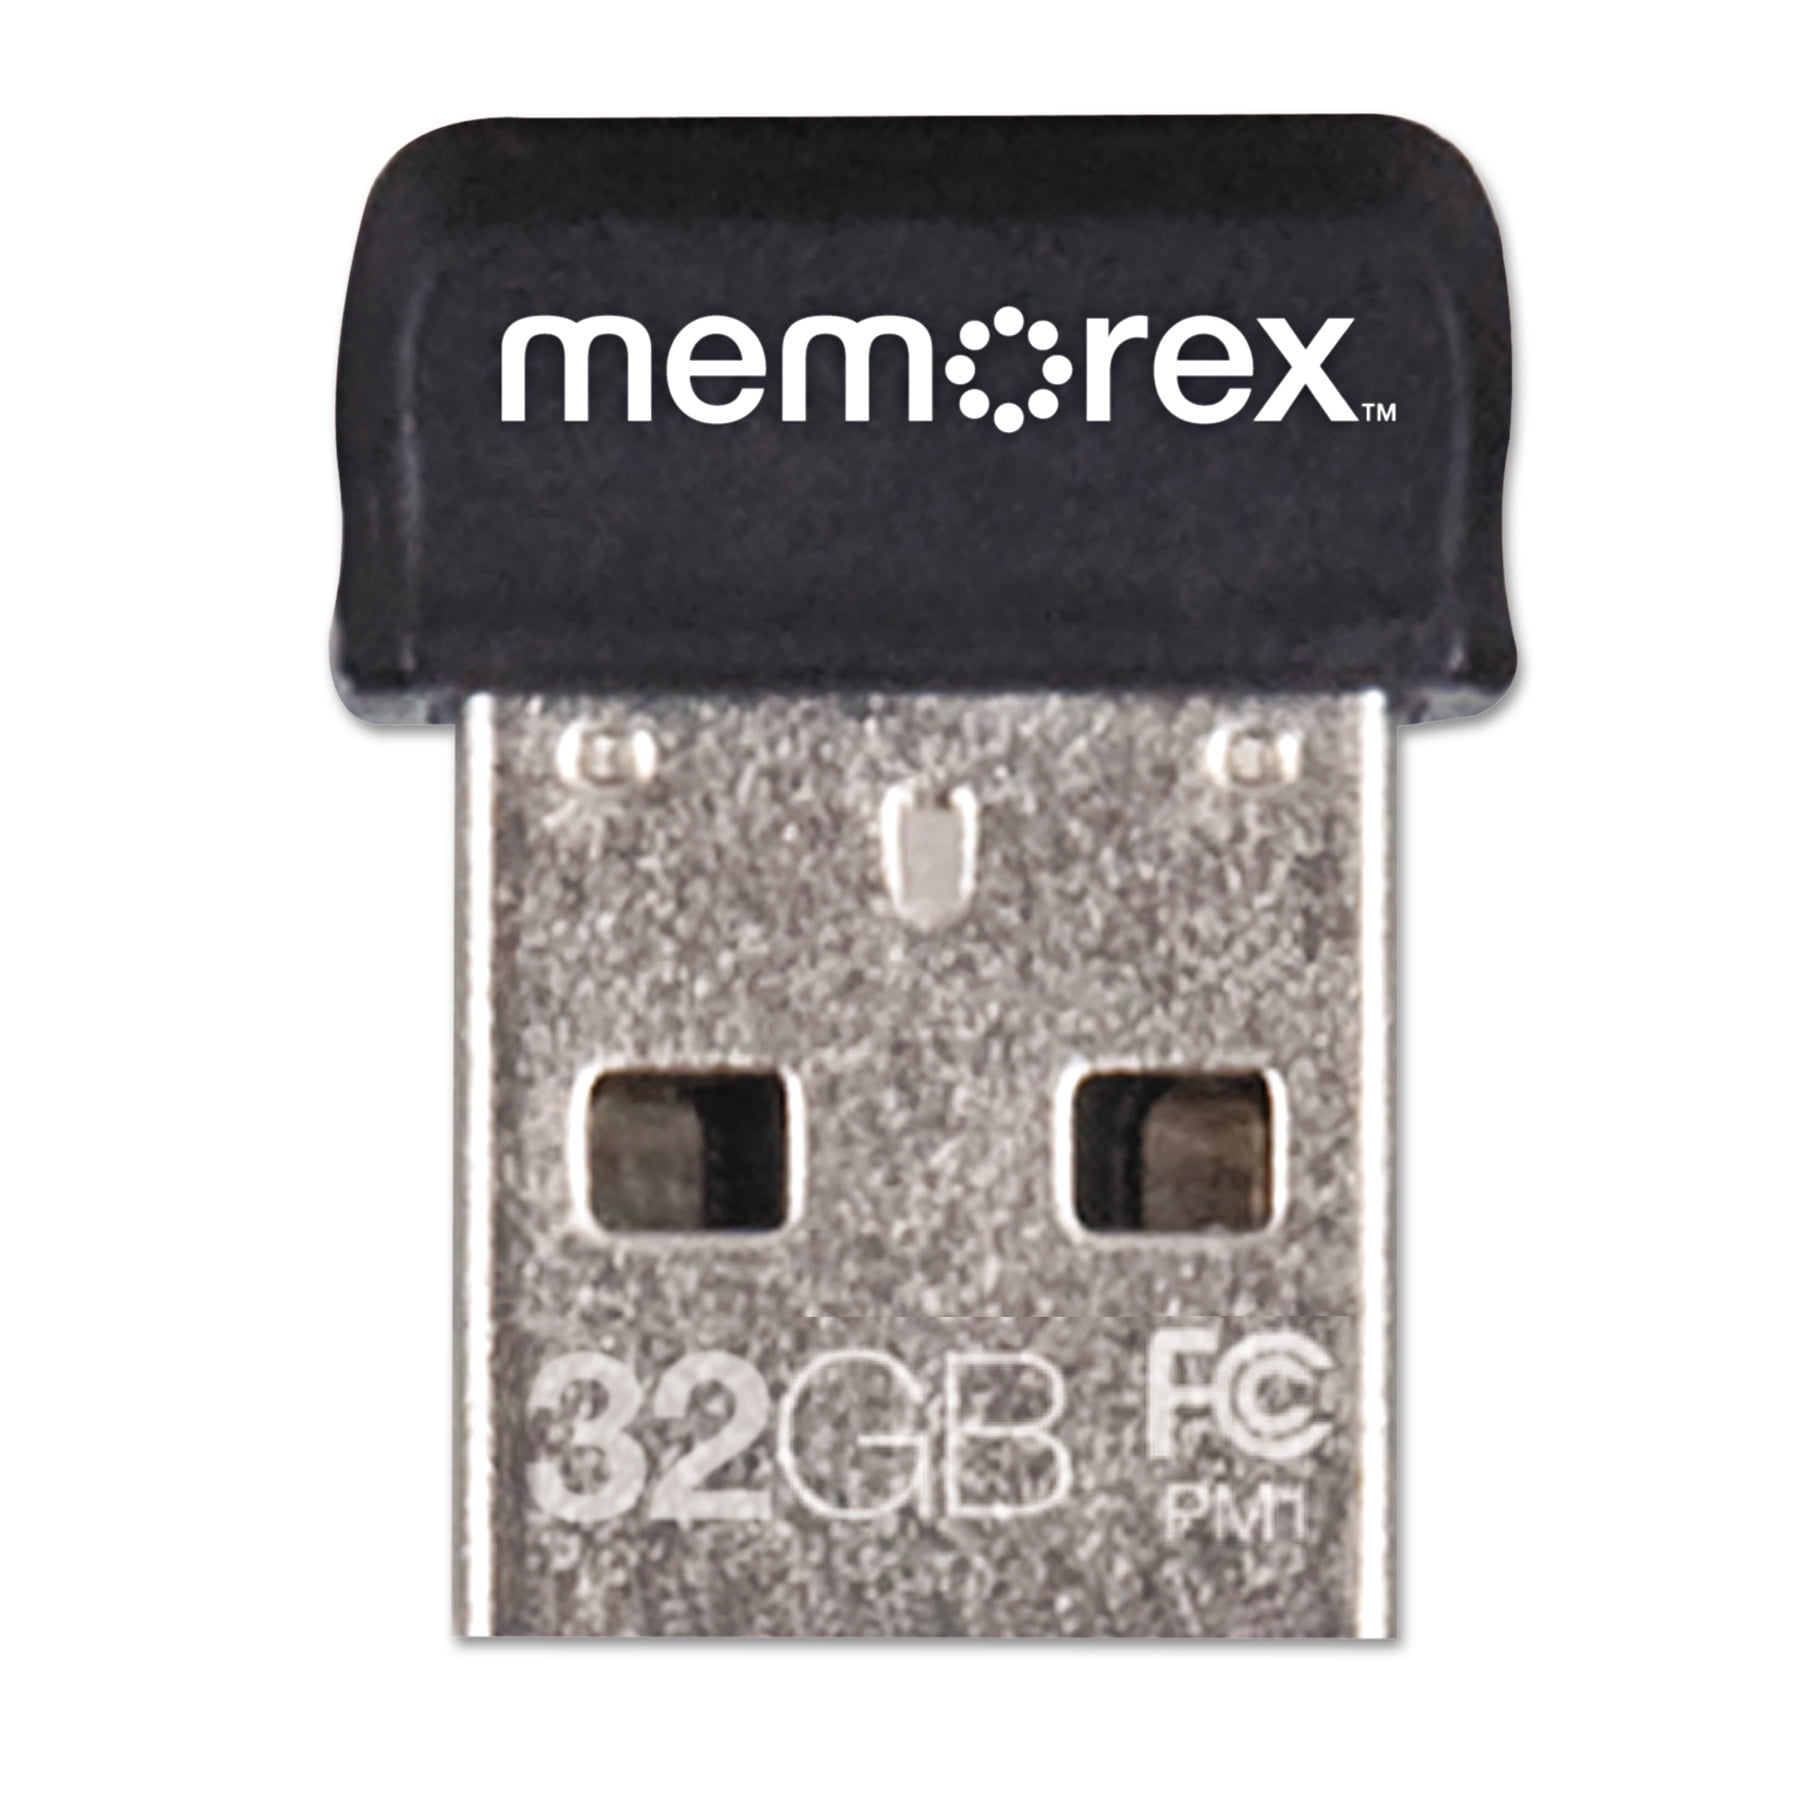 8gb memorex thumb drive teas yourself